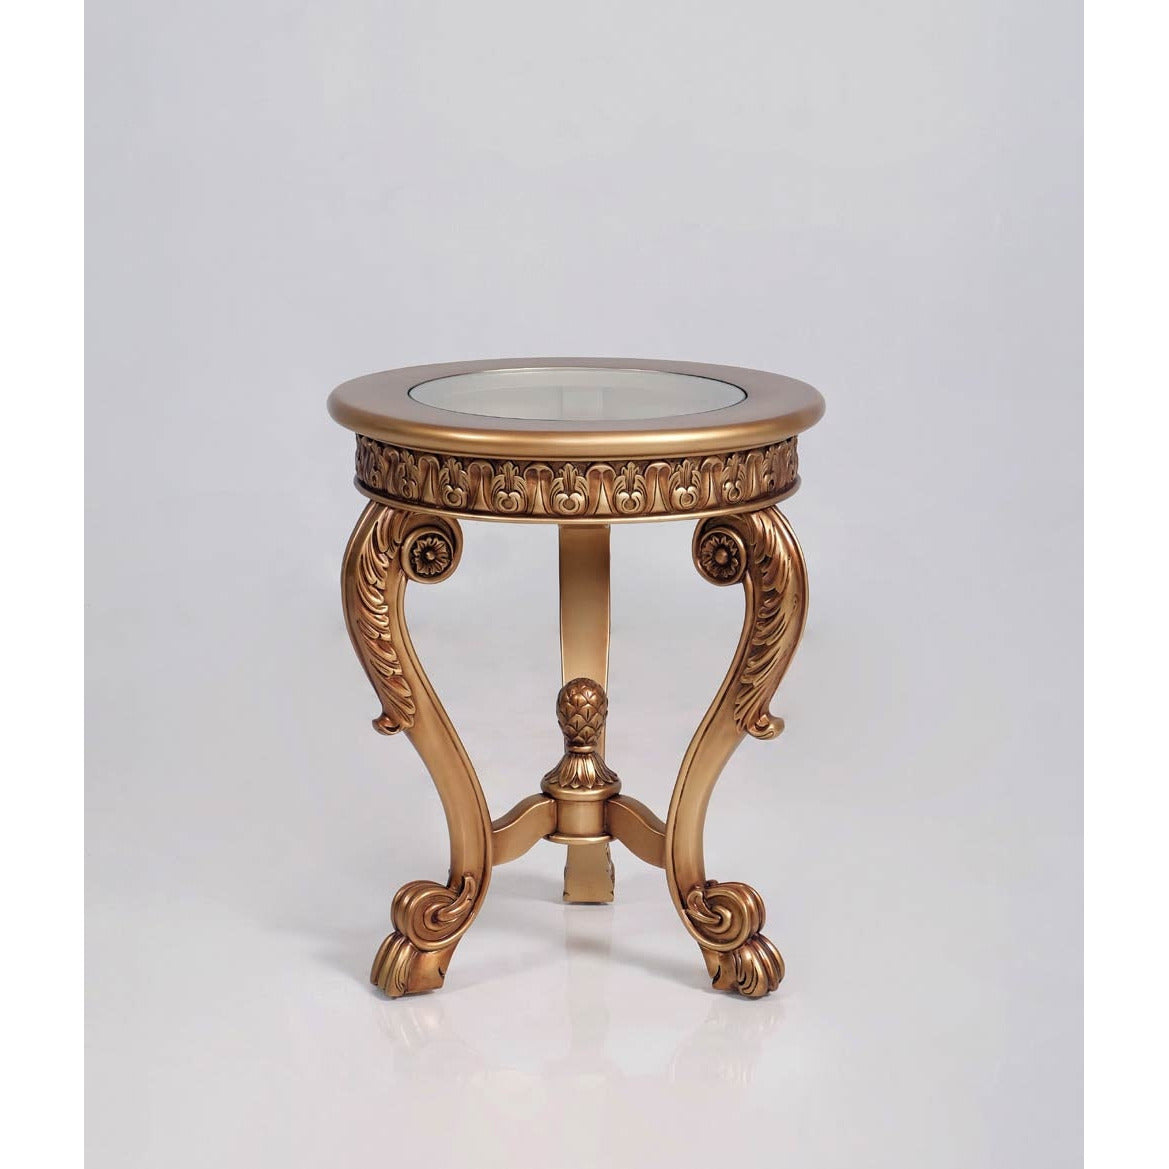 European Furniture - Carlotta Luxury End Table in Golden Bronze - 41951-ET - New Star Living